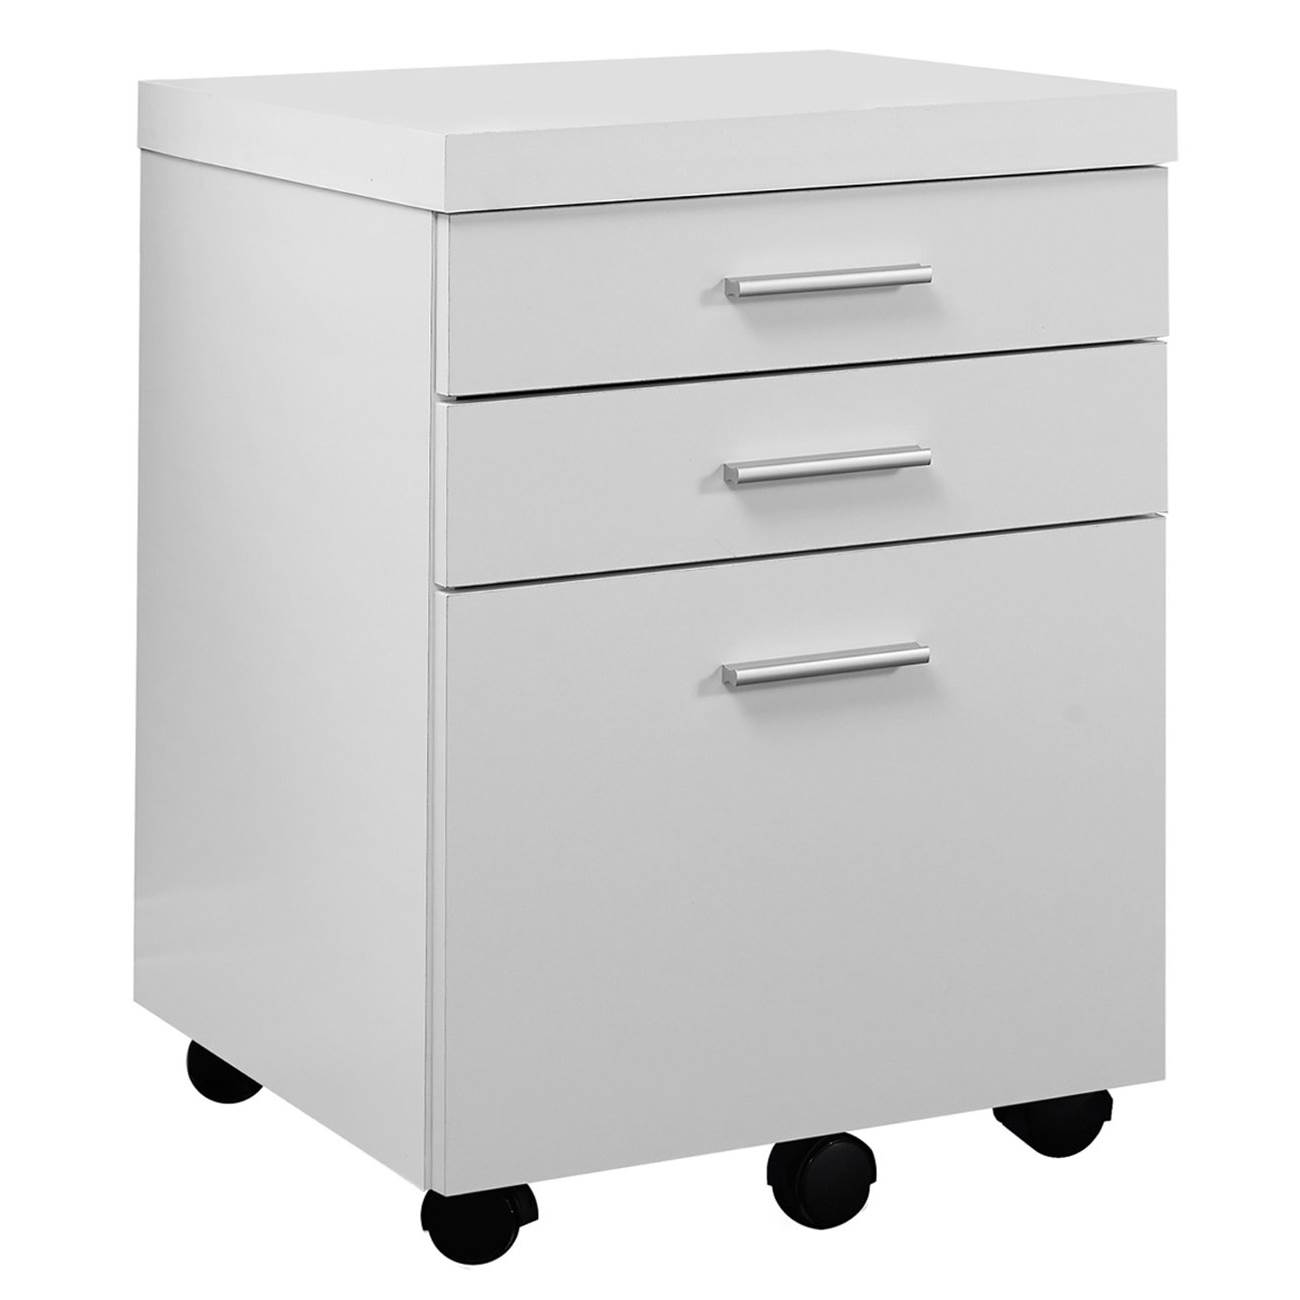 Lock Cabinet,2colors Ikea ERIK Metal Home Office Filing Drawer Unit on Castors 